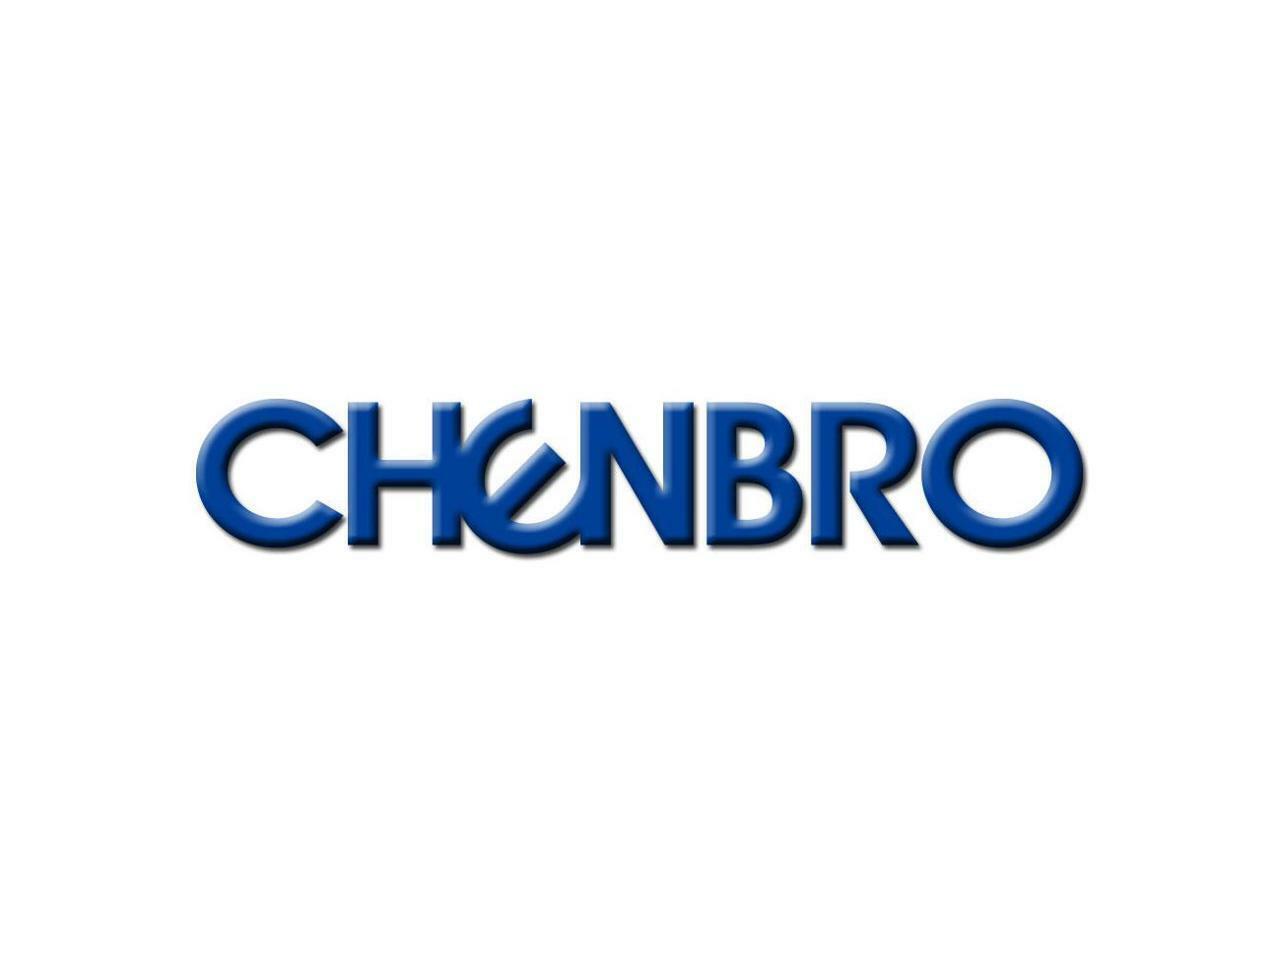 Chenbro Micom - RM23808M3RP8 - Chenbro RM238 Series RM23808M3RP8 800W 2U Dual So